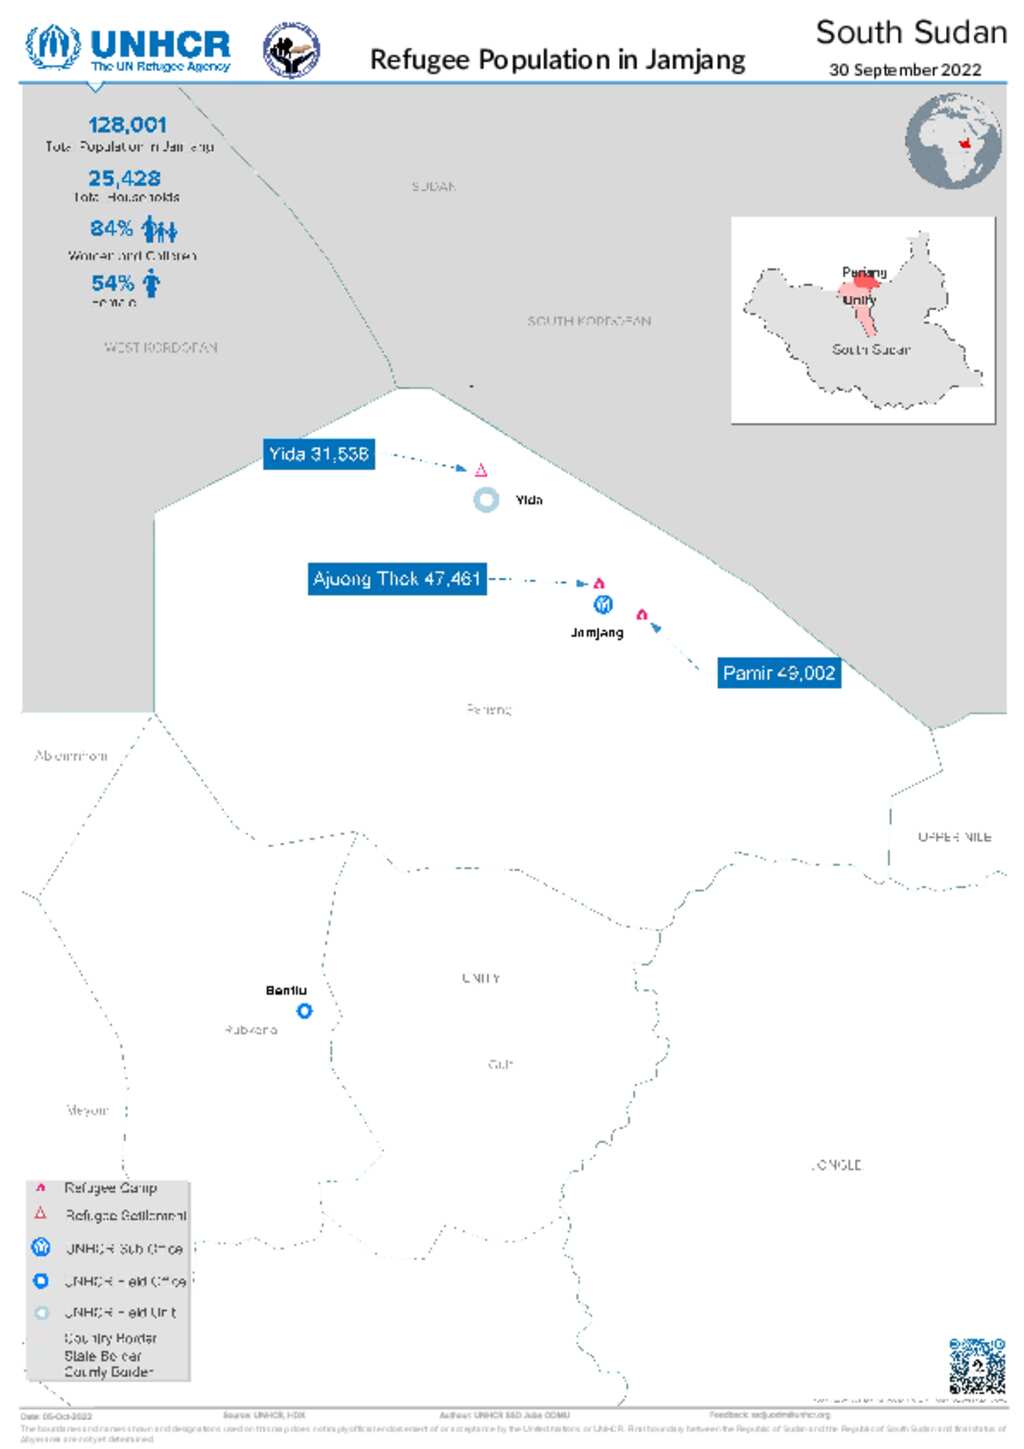 Document South Sudan Refugee Population Map in Jamjang Sept 2022